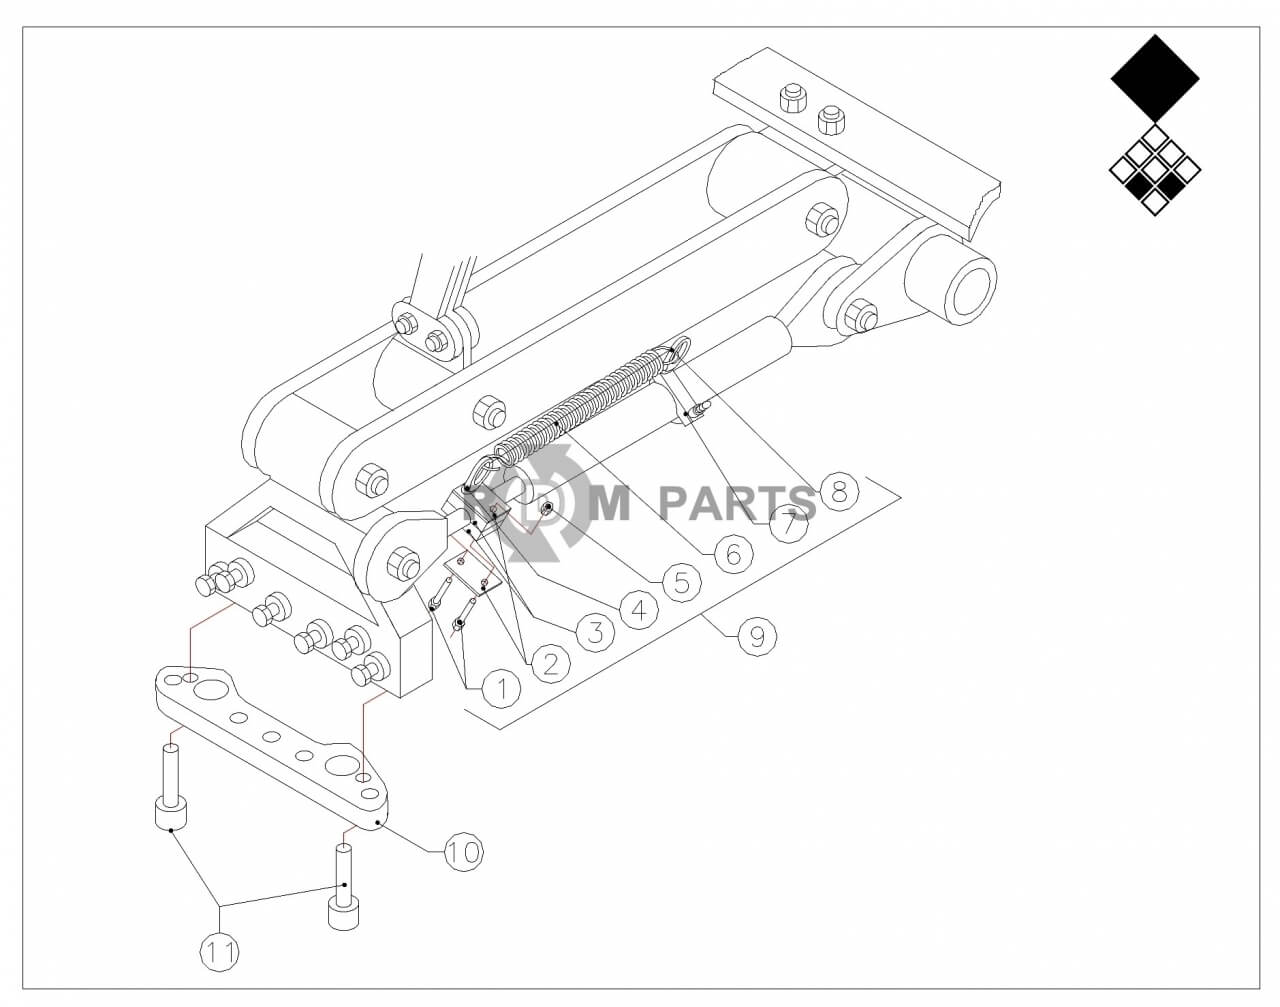 Replacement parts for VD7516 Penhouder Spanveer